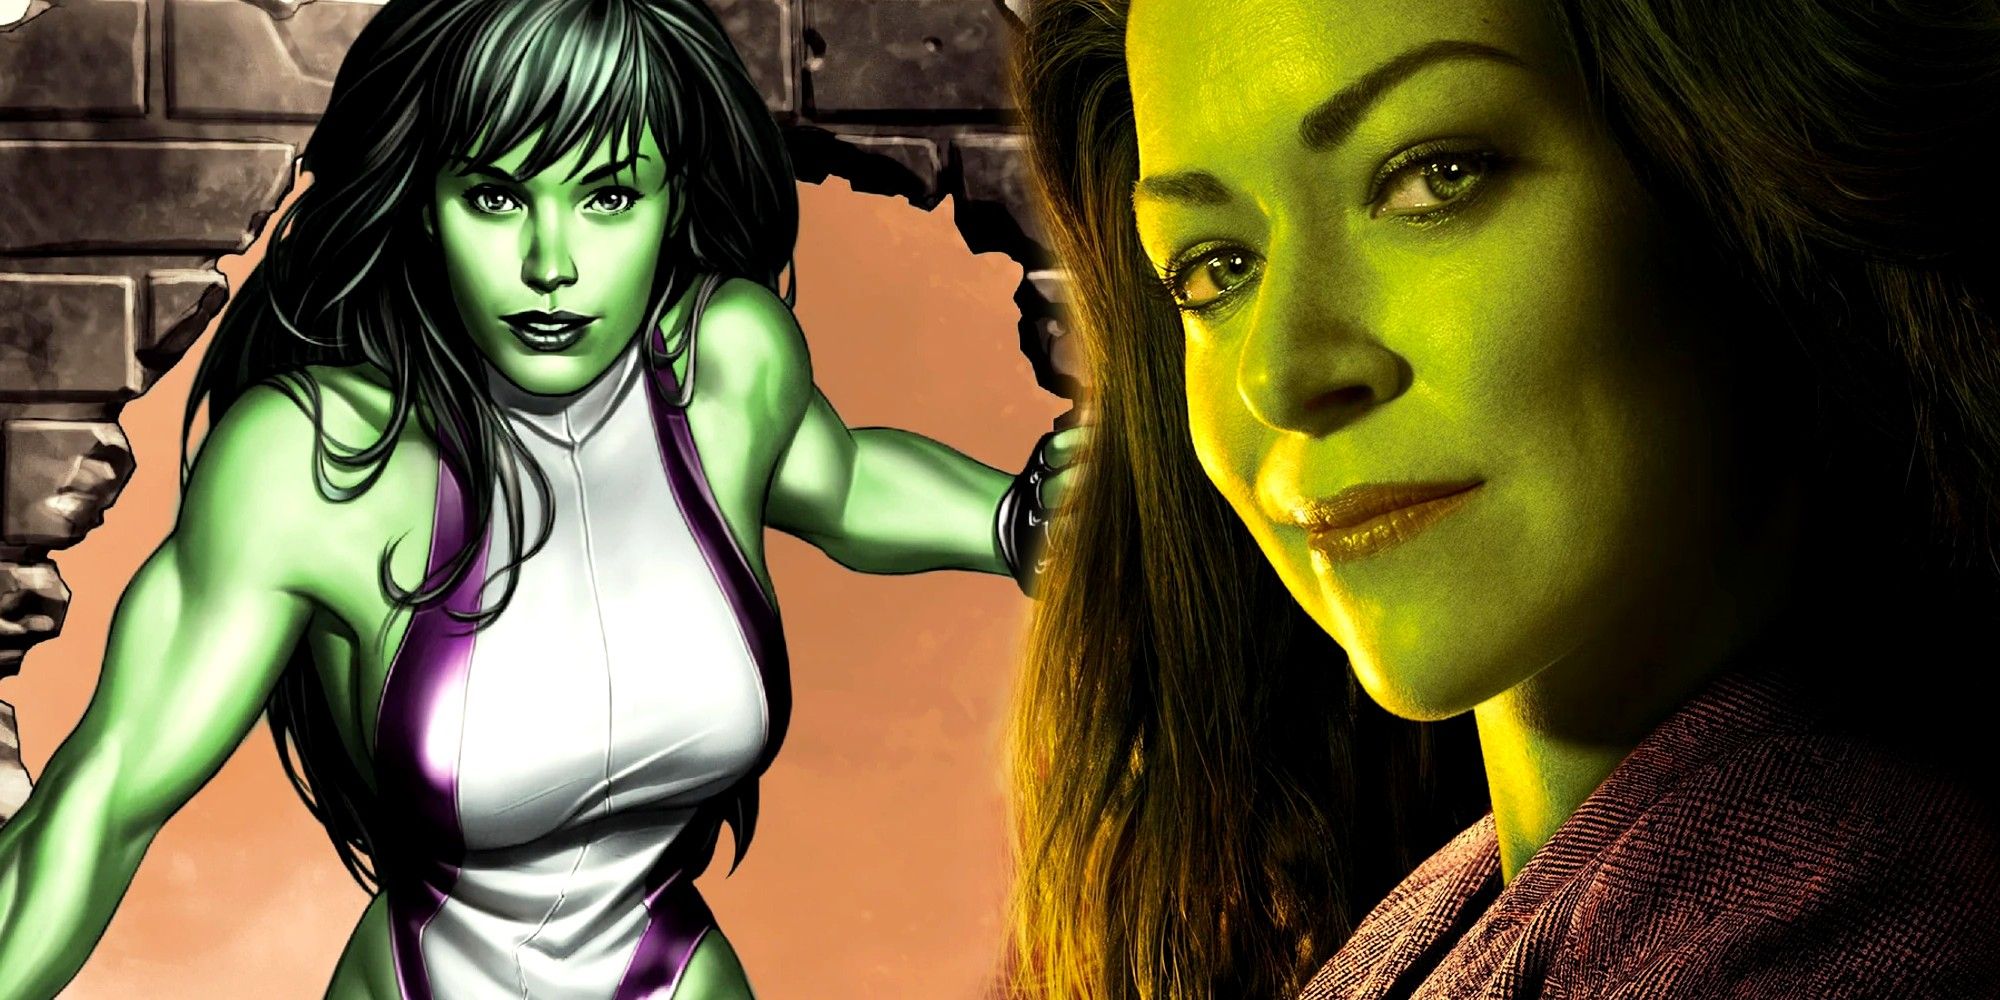 She-Hulk by Dan Slott: The Complete Collection, Volume 1 by Dan Slott